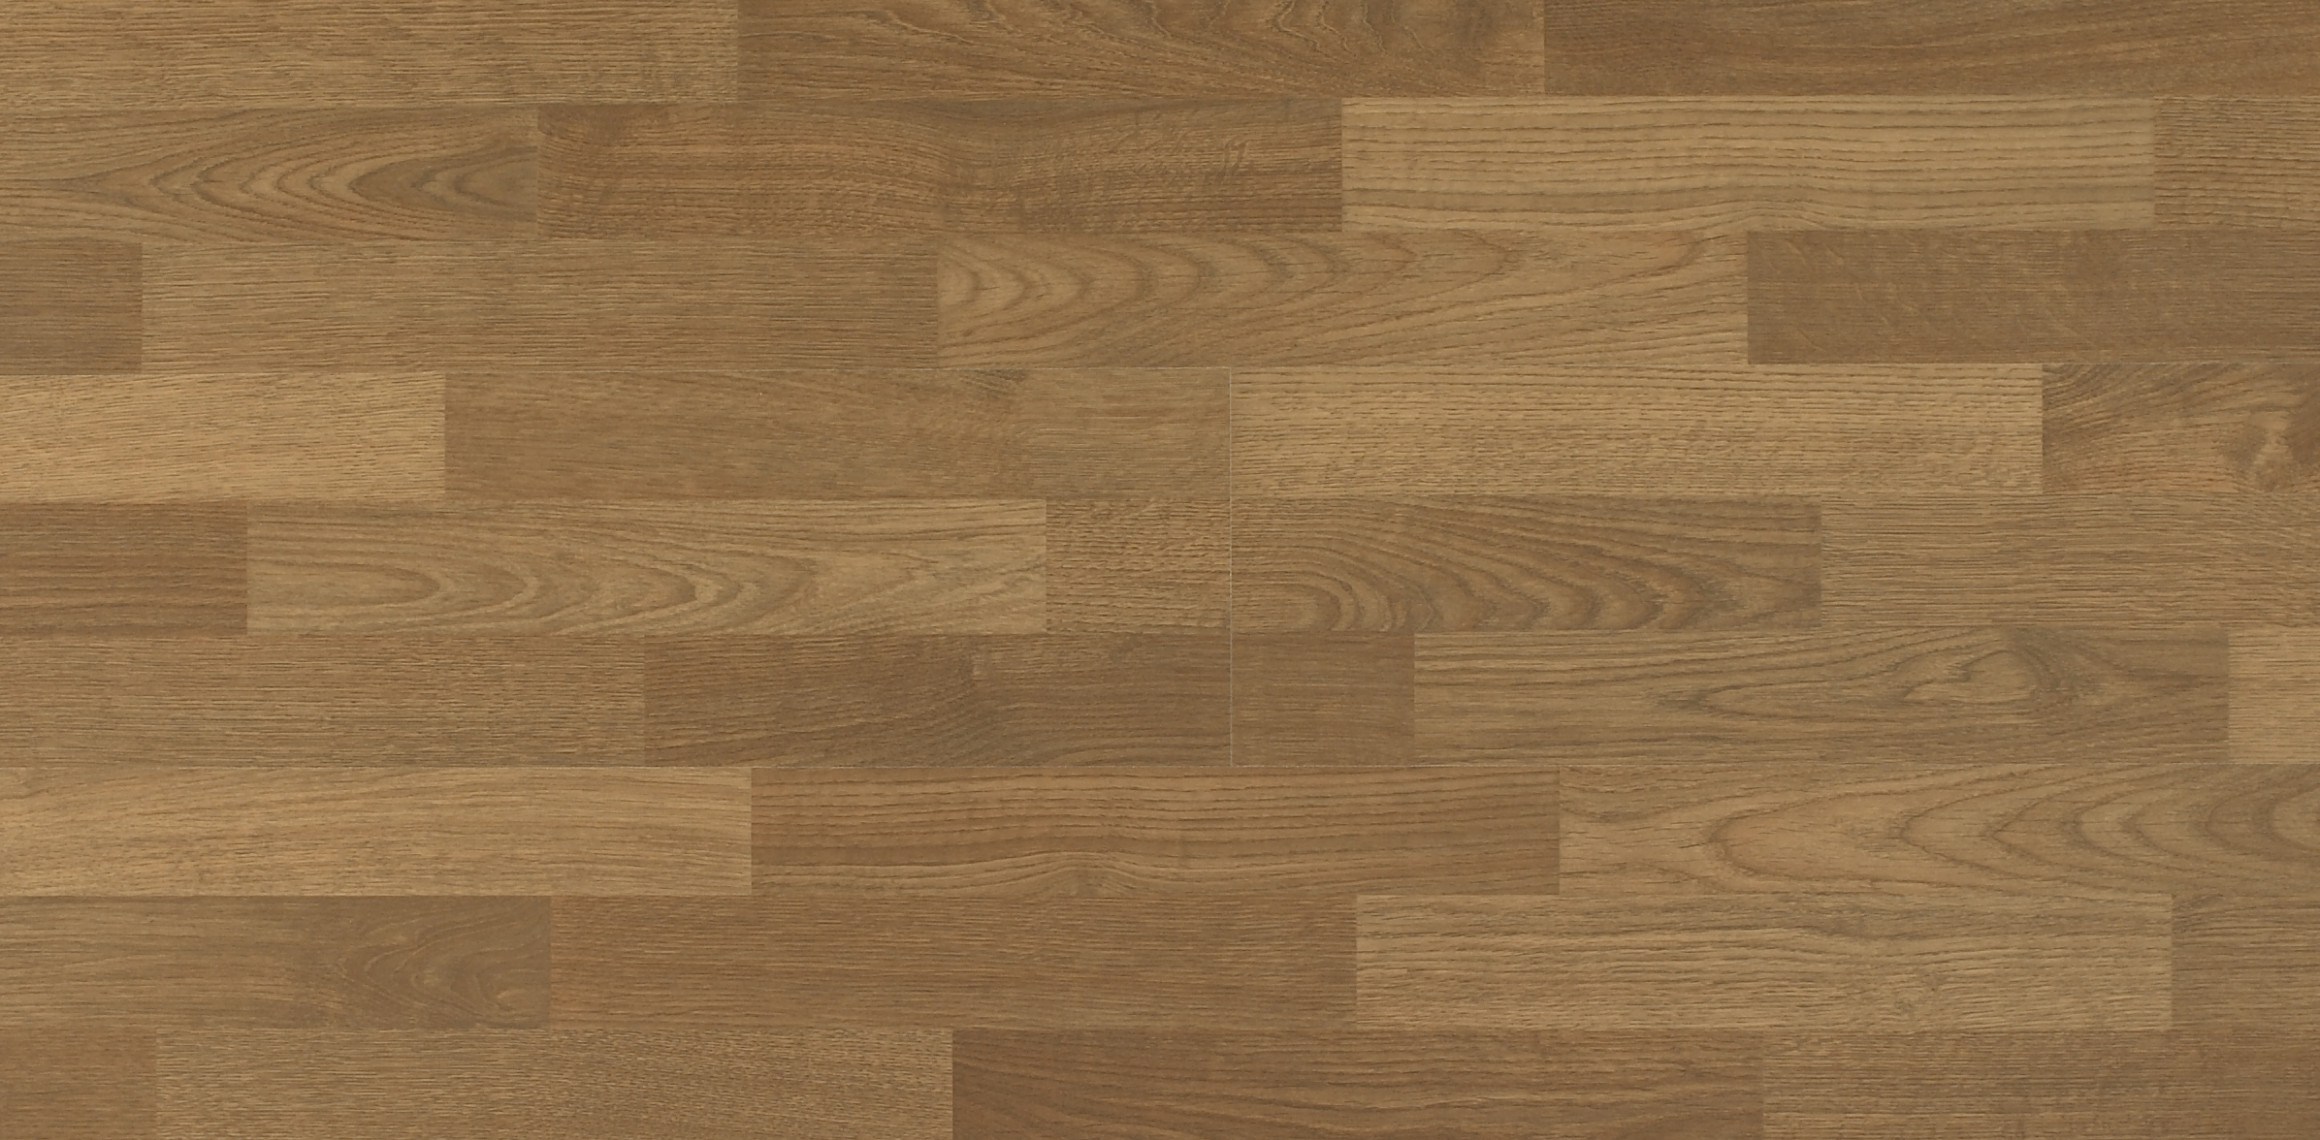 Wood Texture Floor Tiles Images Home